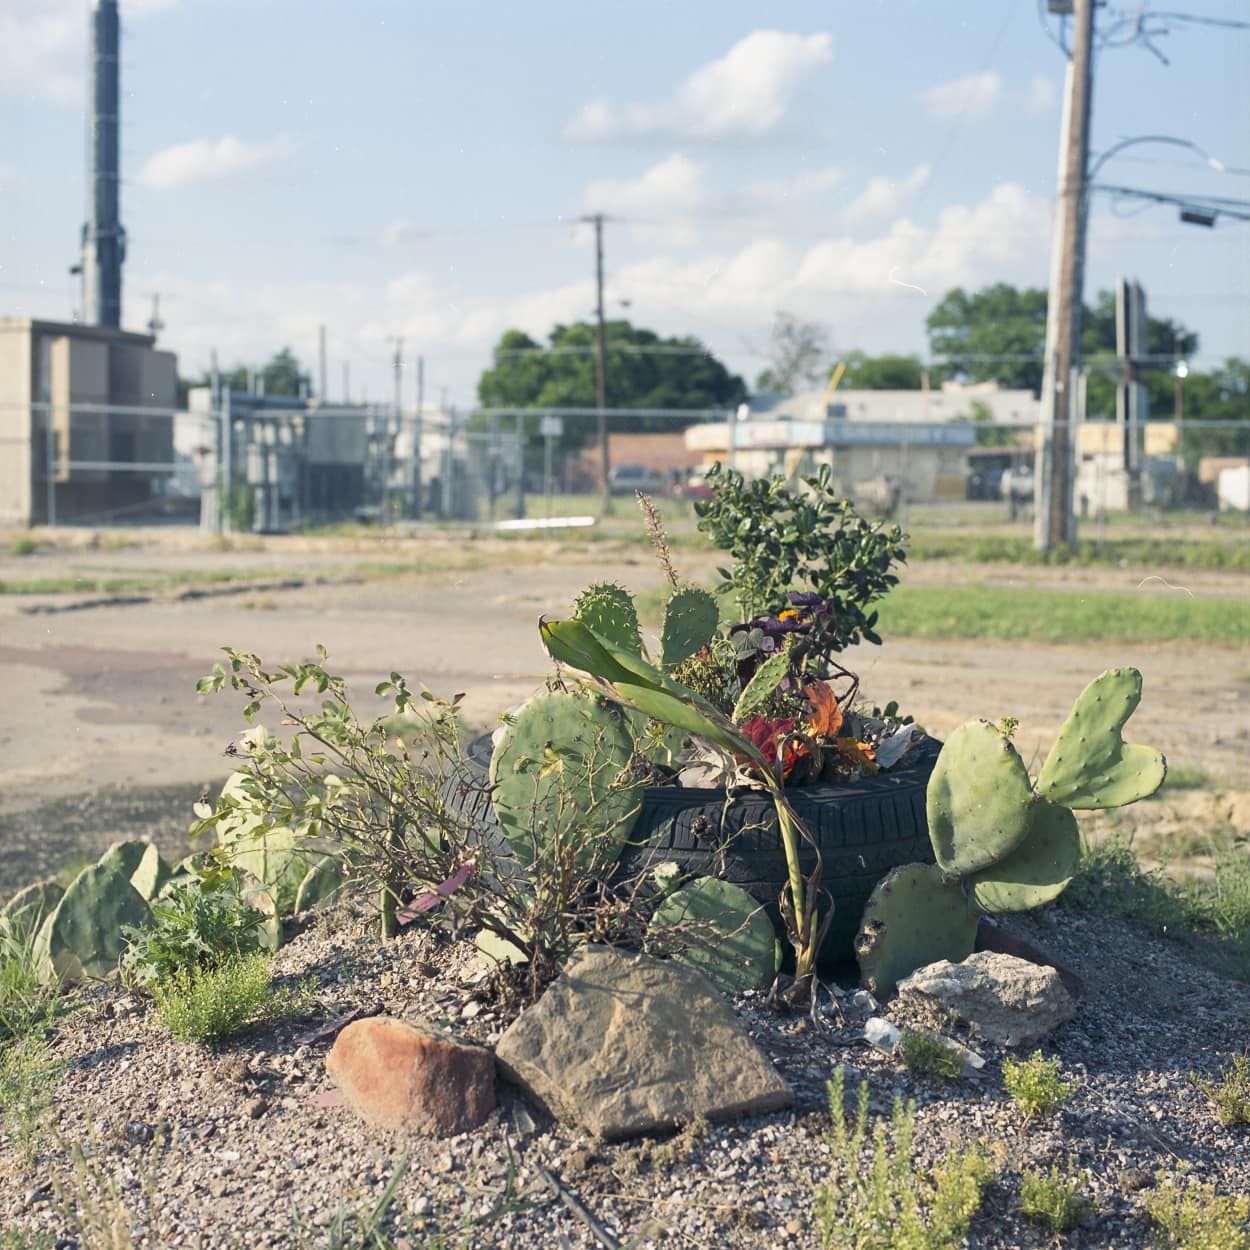 Neighborhood Gentrification, A Photography Documentary - Part 3